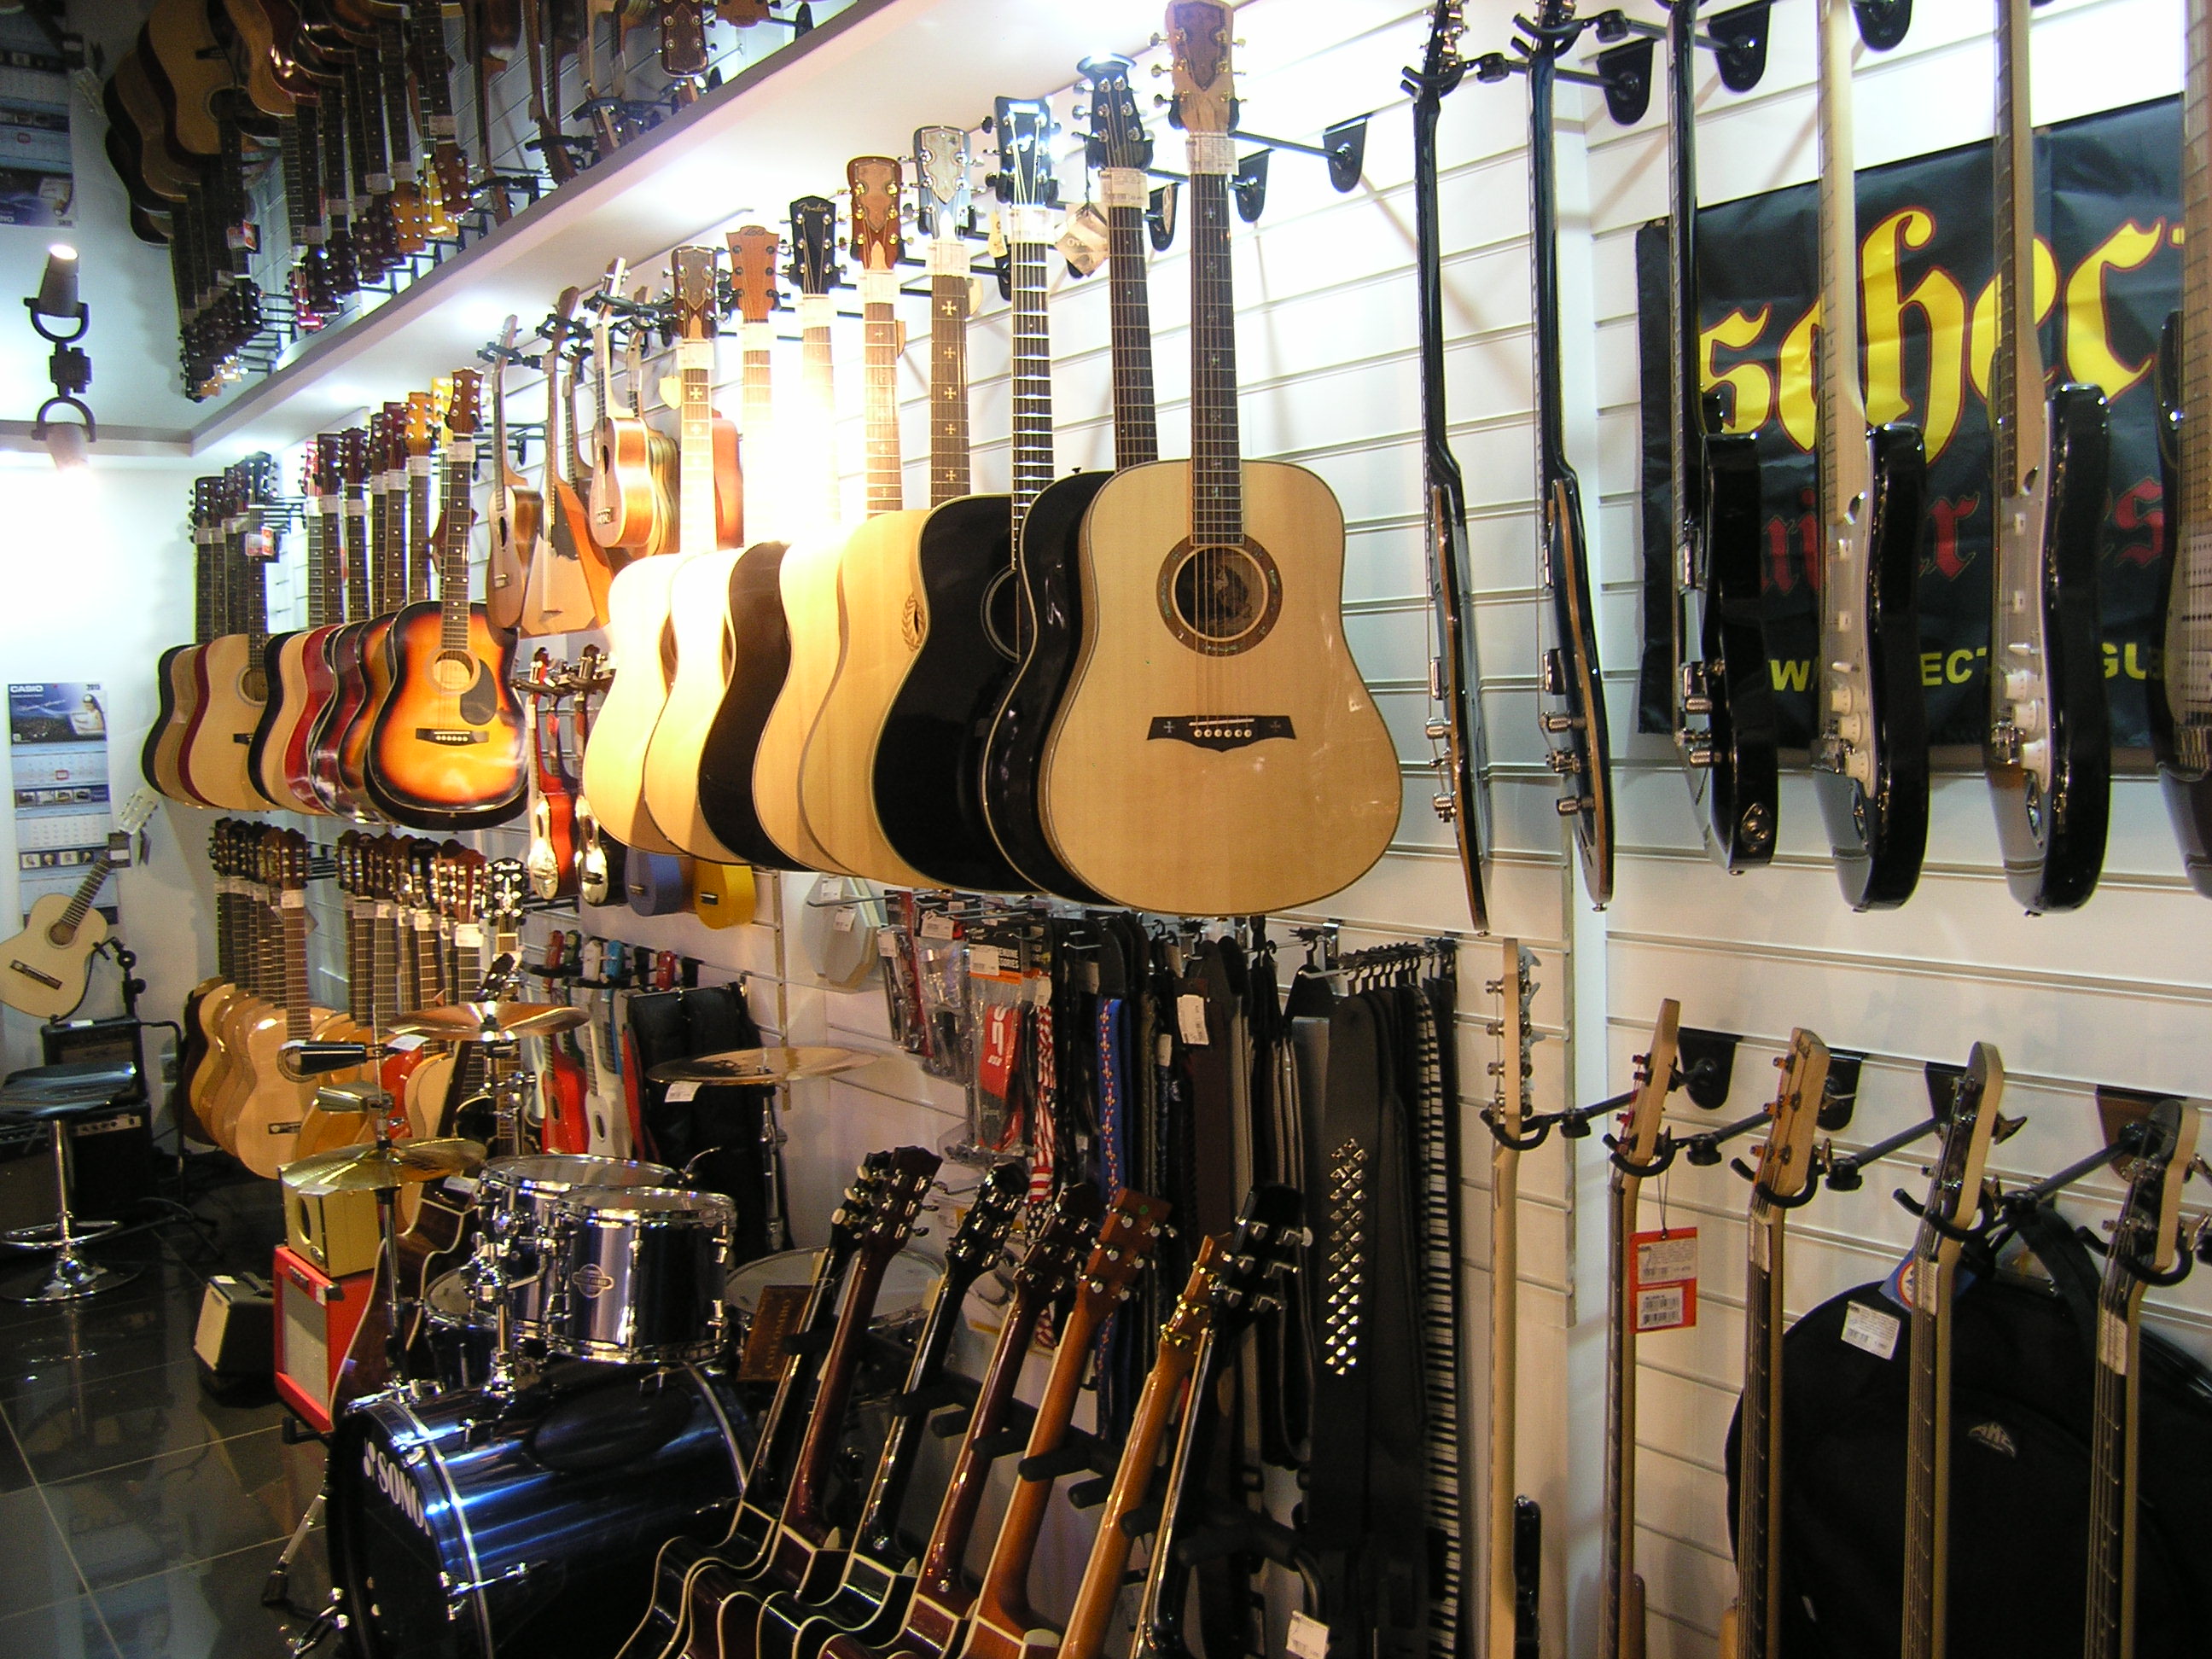 Музмаг. Музыкальный магазин Октава. Соната Самара музыкальный магазин. Гитары музыкальные магазины. Гитарный магазин.